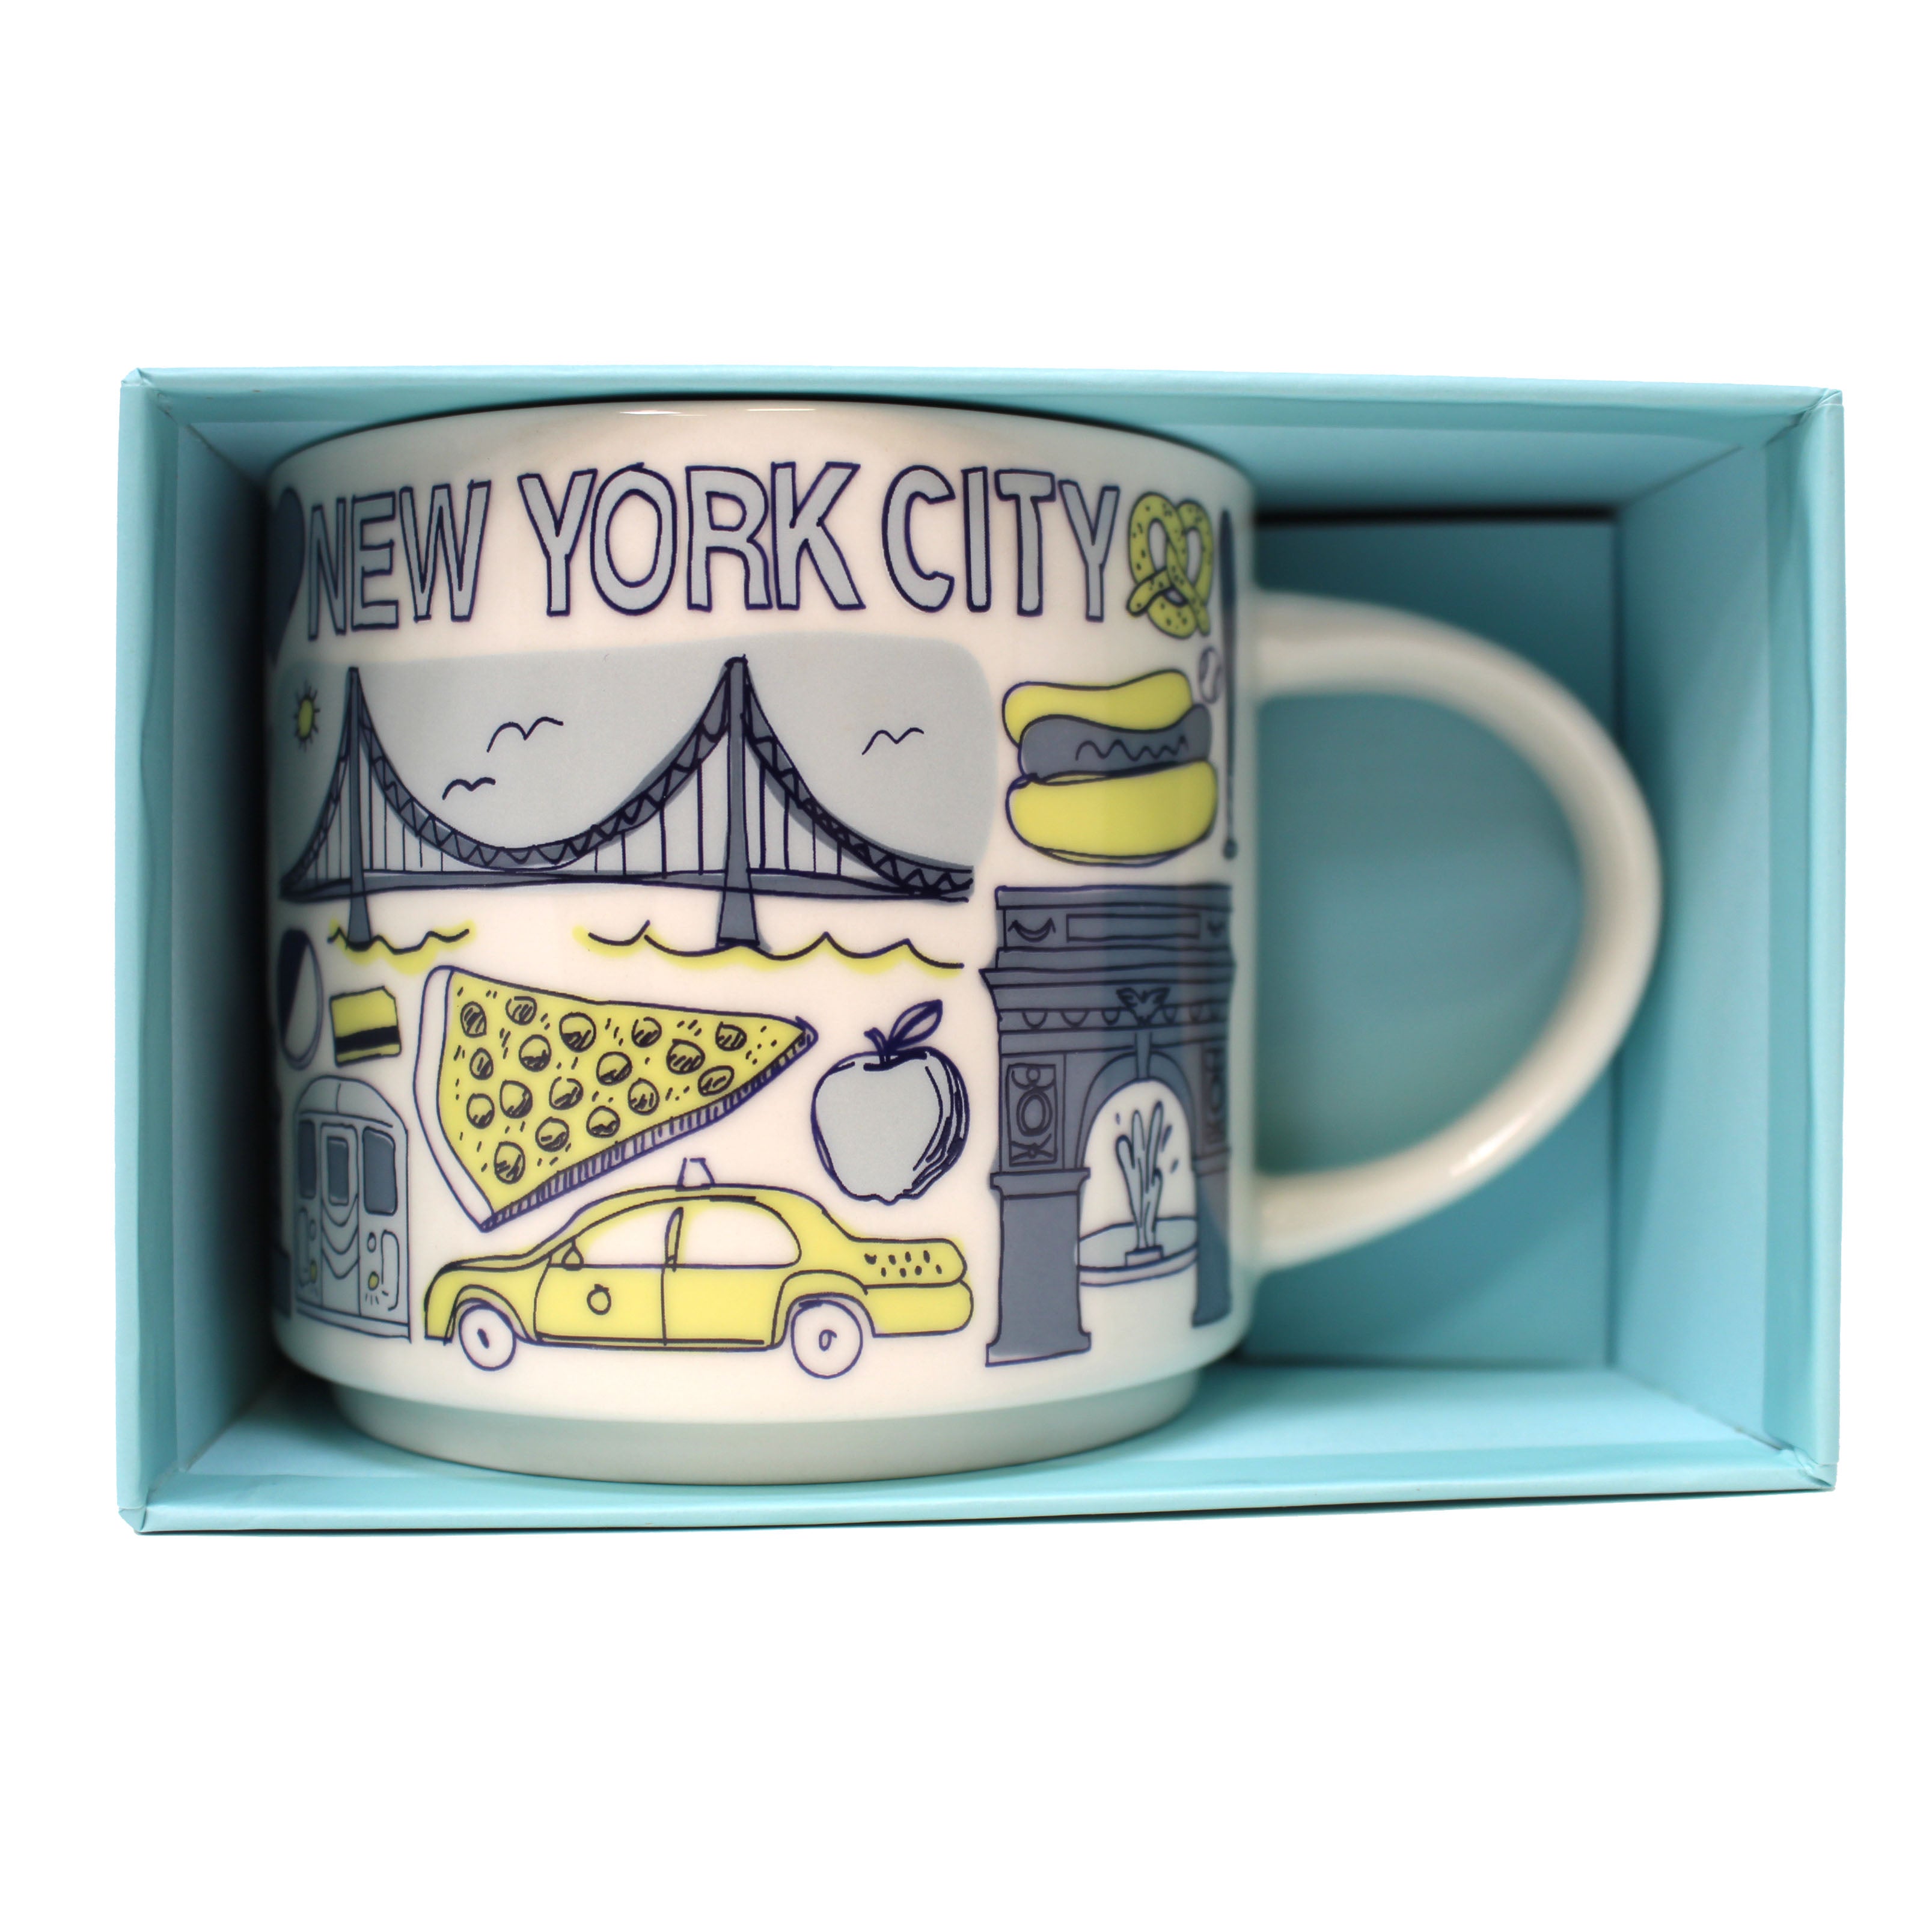 Starbucks Been There Series New York City Ceramic Mug, 14 Oz